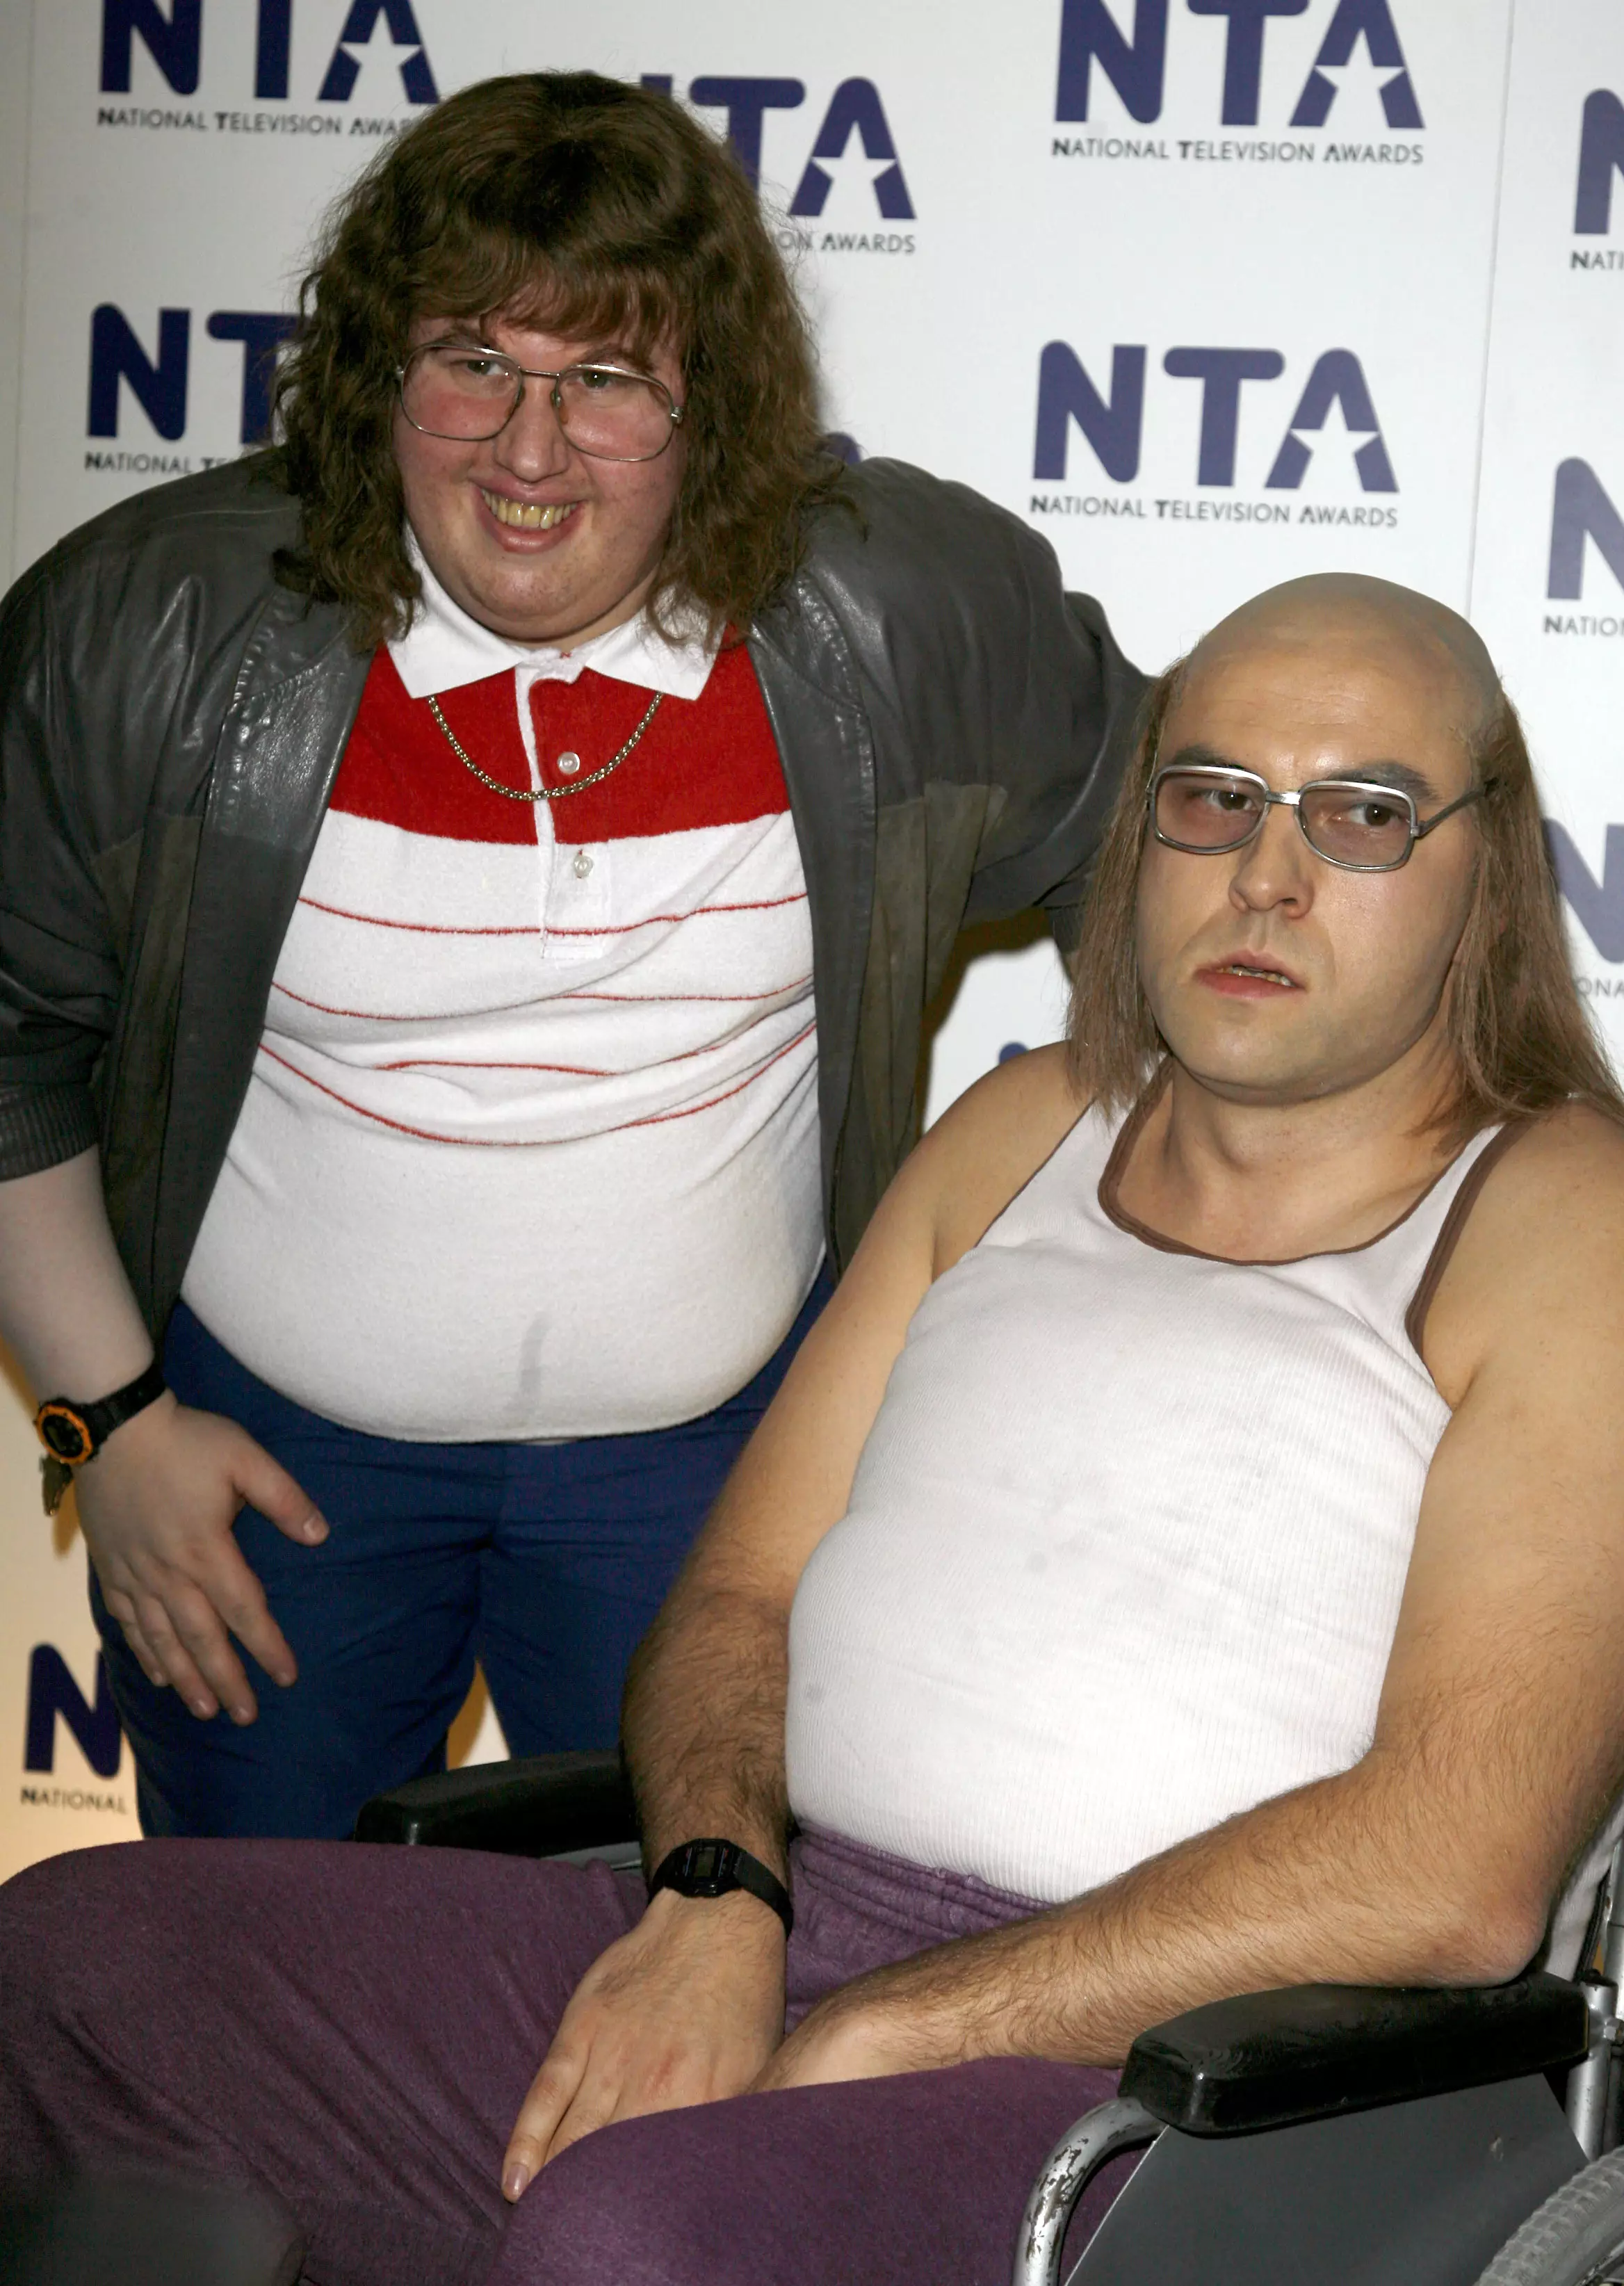 David Walliams and Matt Lucas in the press room at the 2007 National Television Awards.